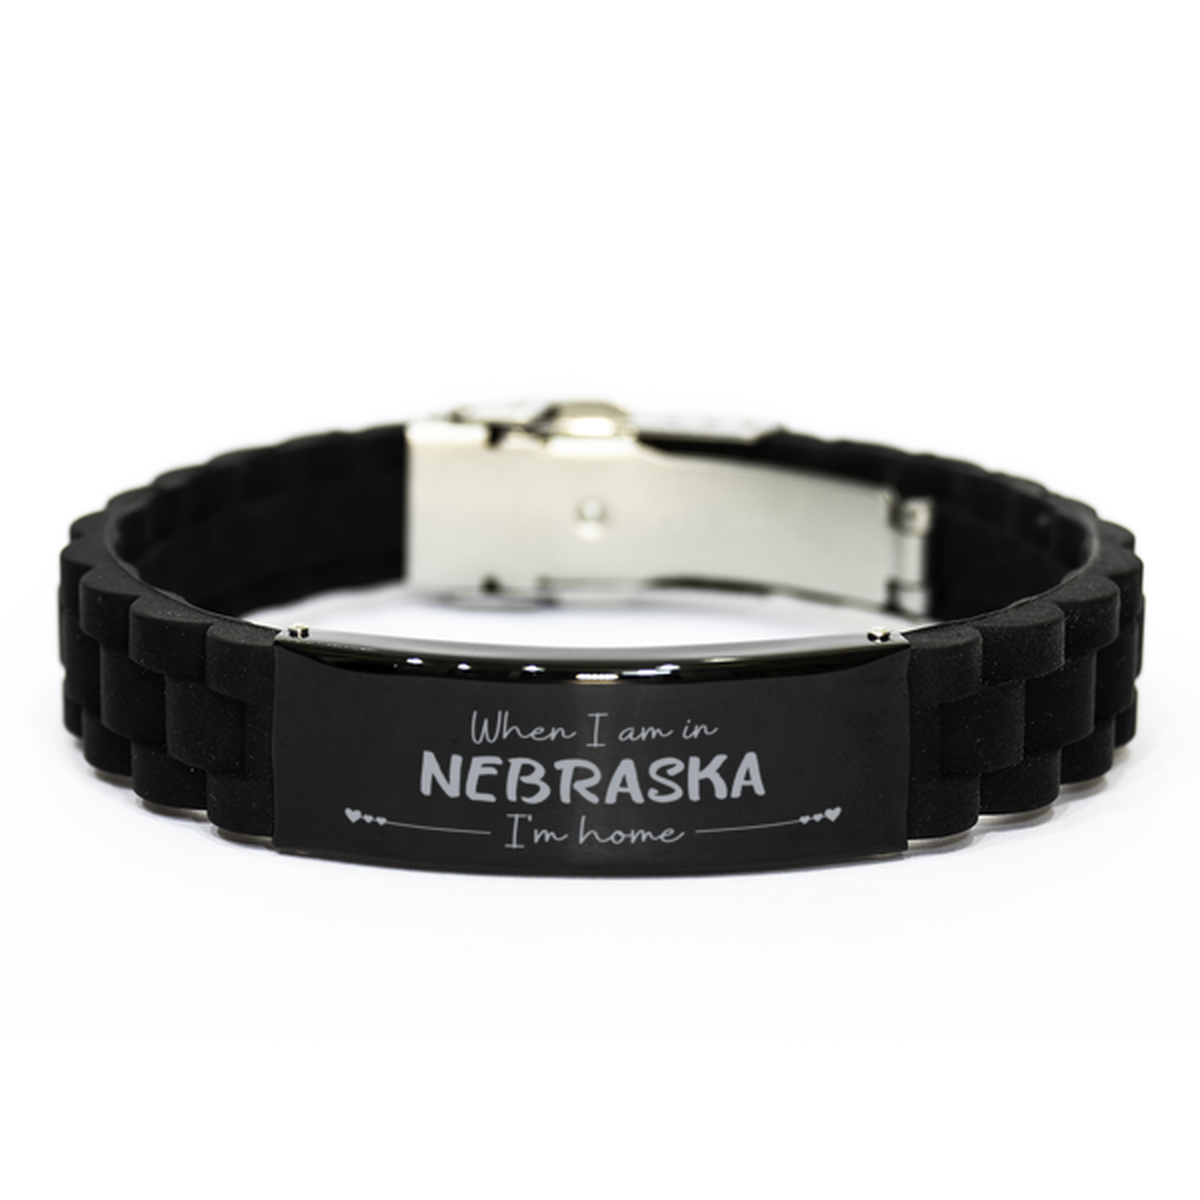 When I am in Nebraska I'm home Black Glidelock Clasp Bracelet, Cheap Gifts For Nebraska, State Nebraska Birthday Gifts for Friends Coworker